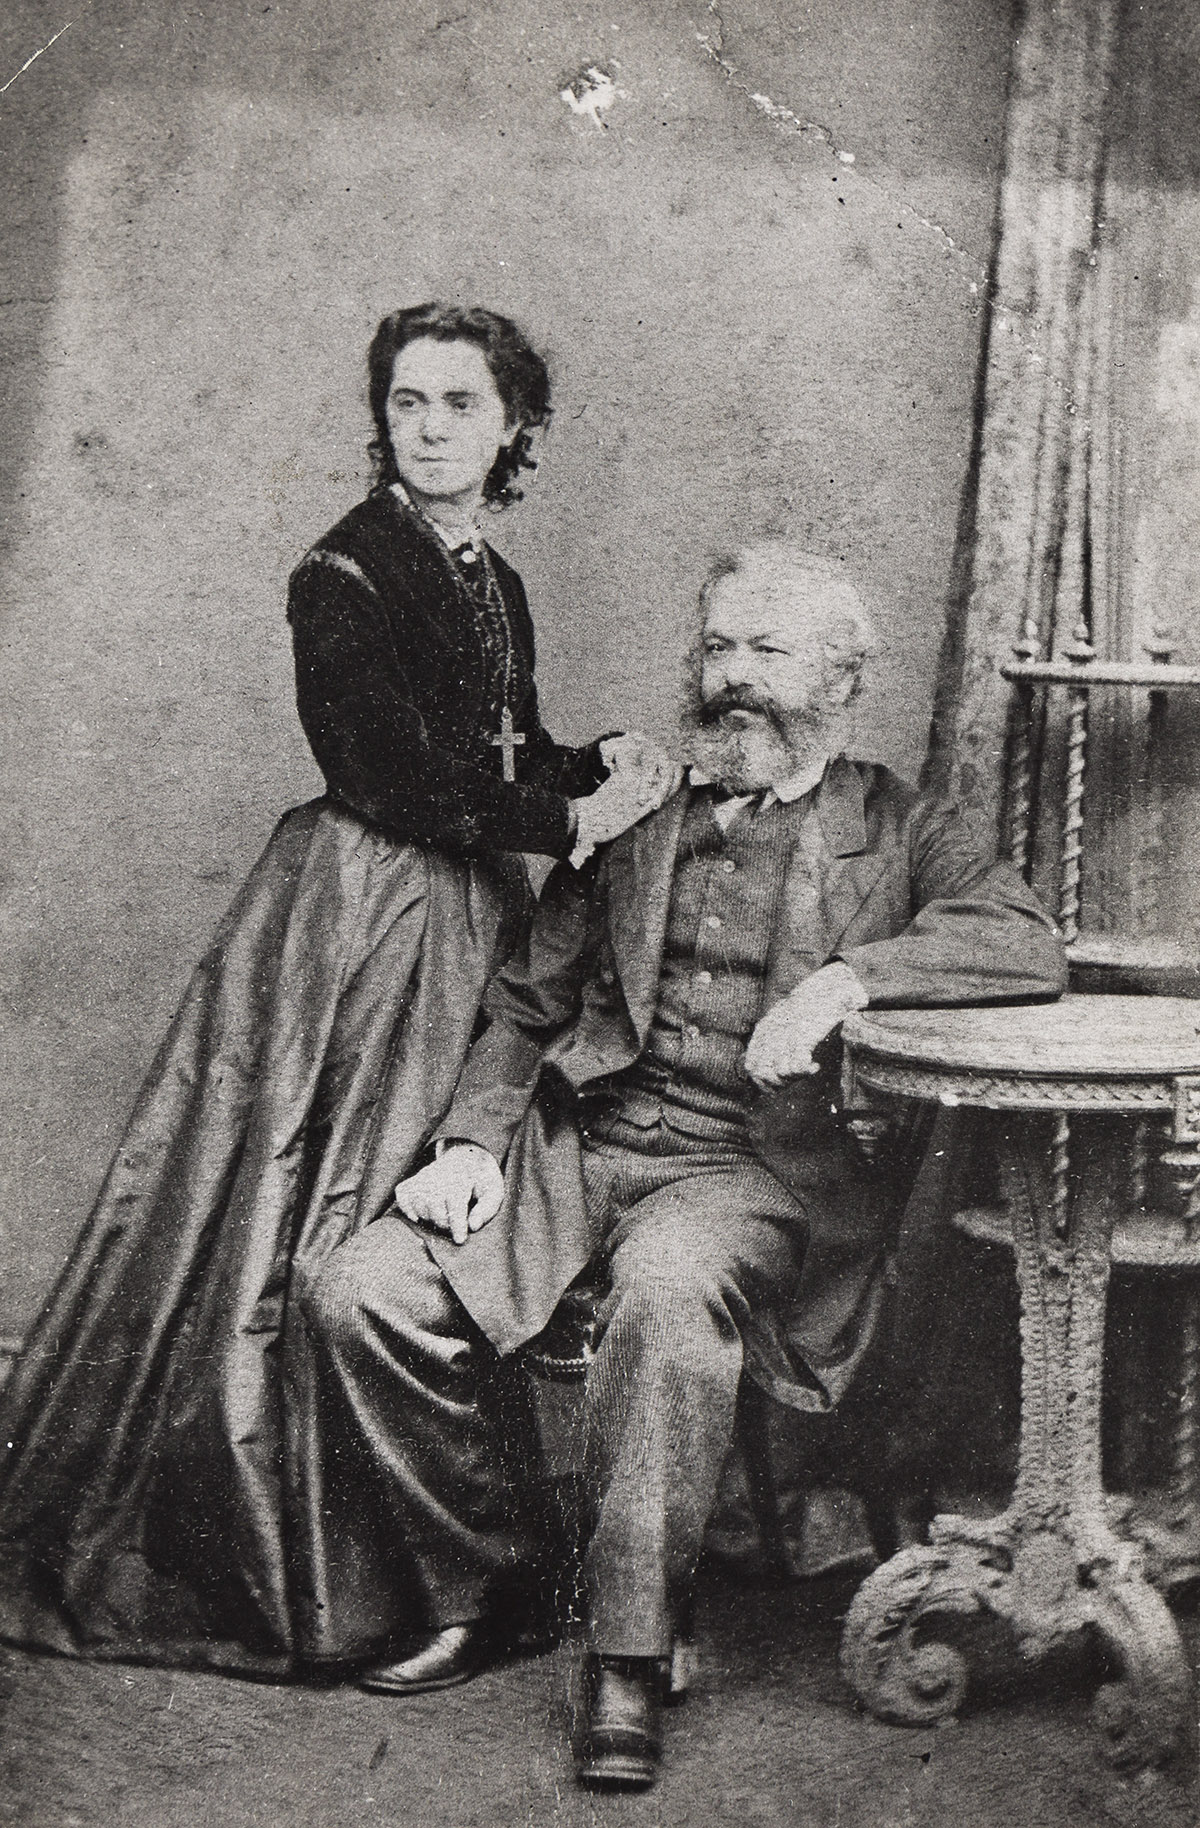 (THE COMMUNIST MANIFESTO) Karl Marx (1818-1883) and his daughter Jenny Caroline Marx (Jenny Longuet 1844-1883).